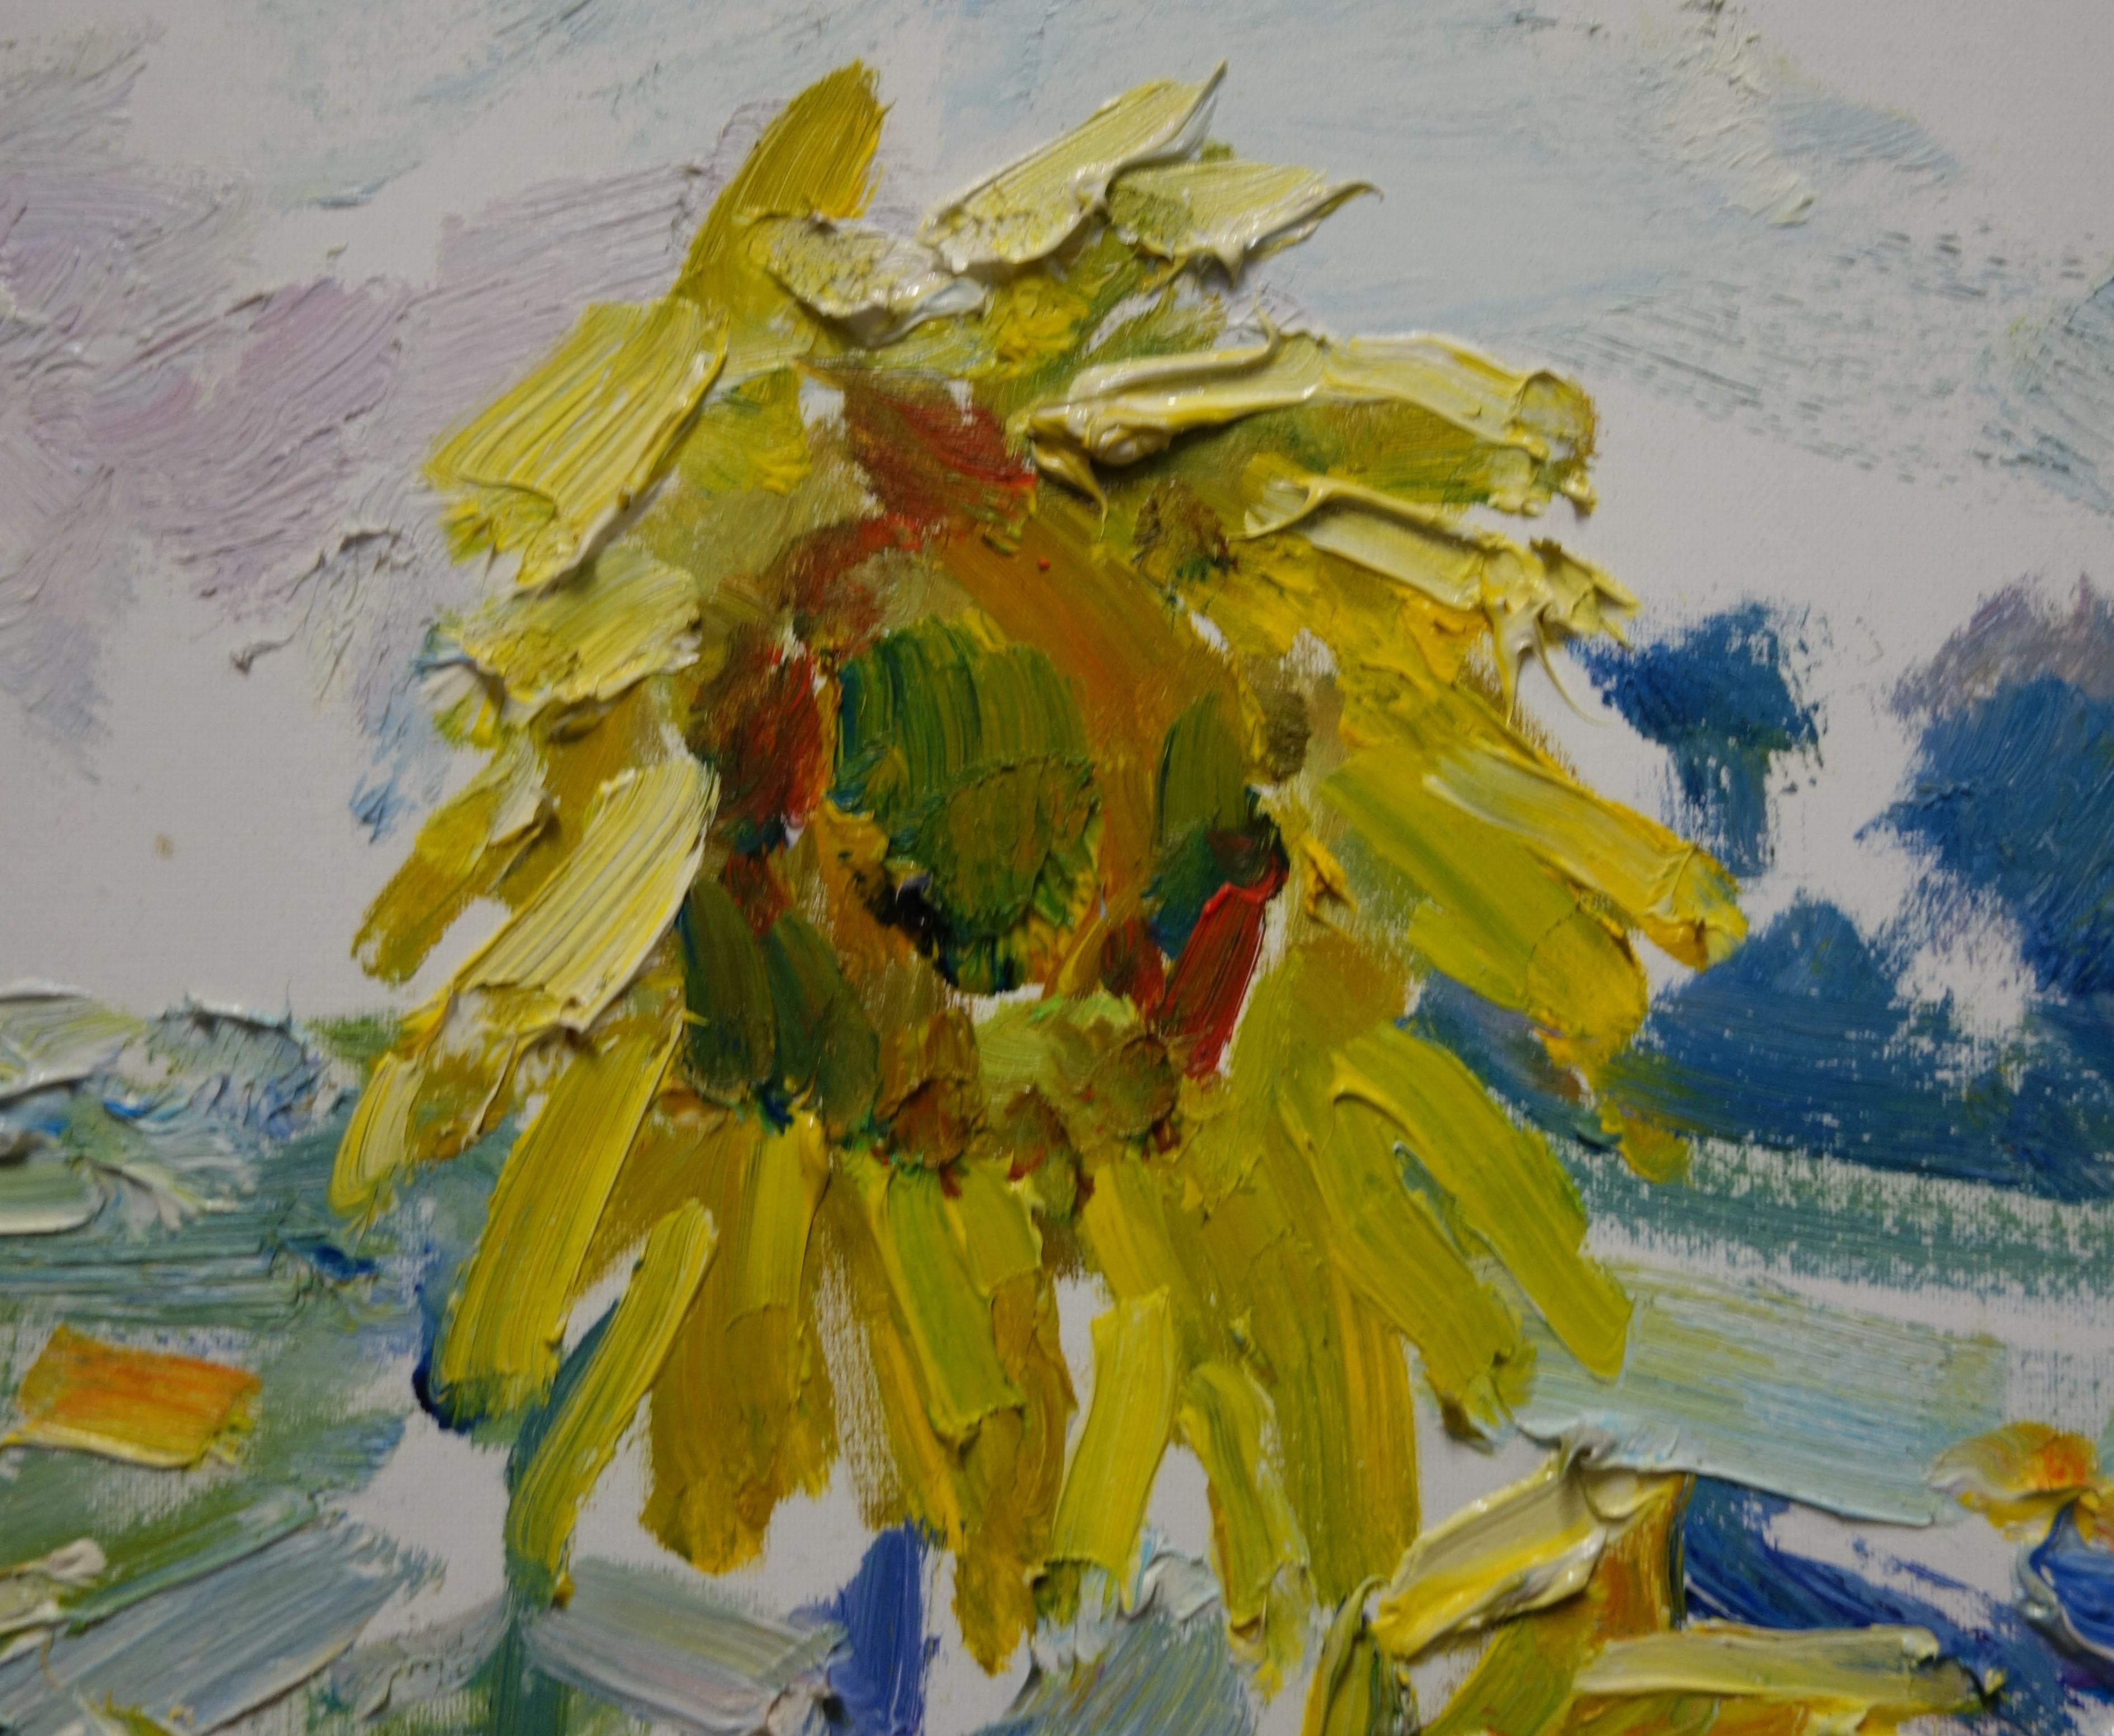 Sunflowers ,Summer,Yellow,impressionist,Russian,landscape,


Georgij MOROZ (Dneprodzerzinsk, Ucraina, 1937 - St. Petersburg, 2015)

1937: he was born in Dneprodzerzinsk, Ucraina.
1949-56: he began artistic studies in Dneprodzerzinsk and later he